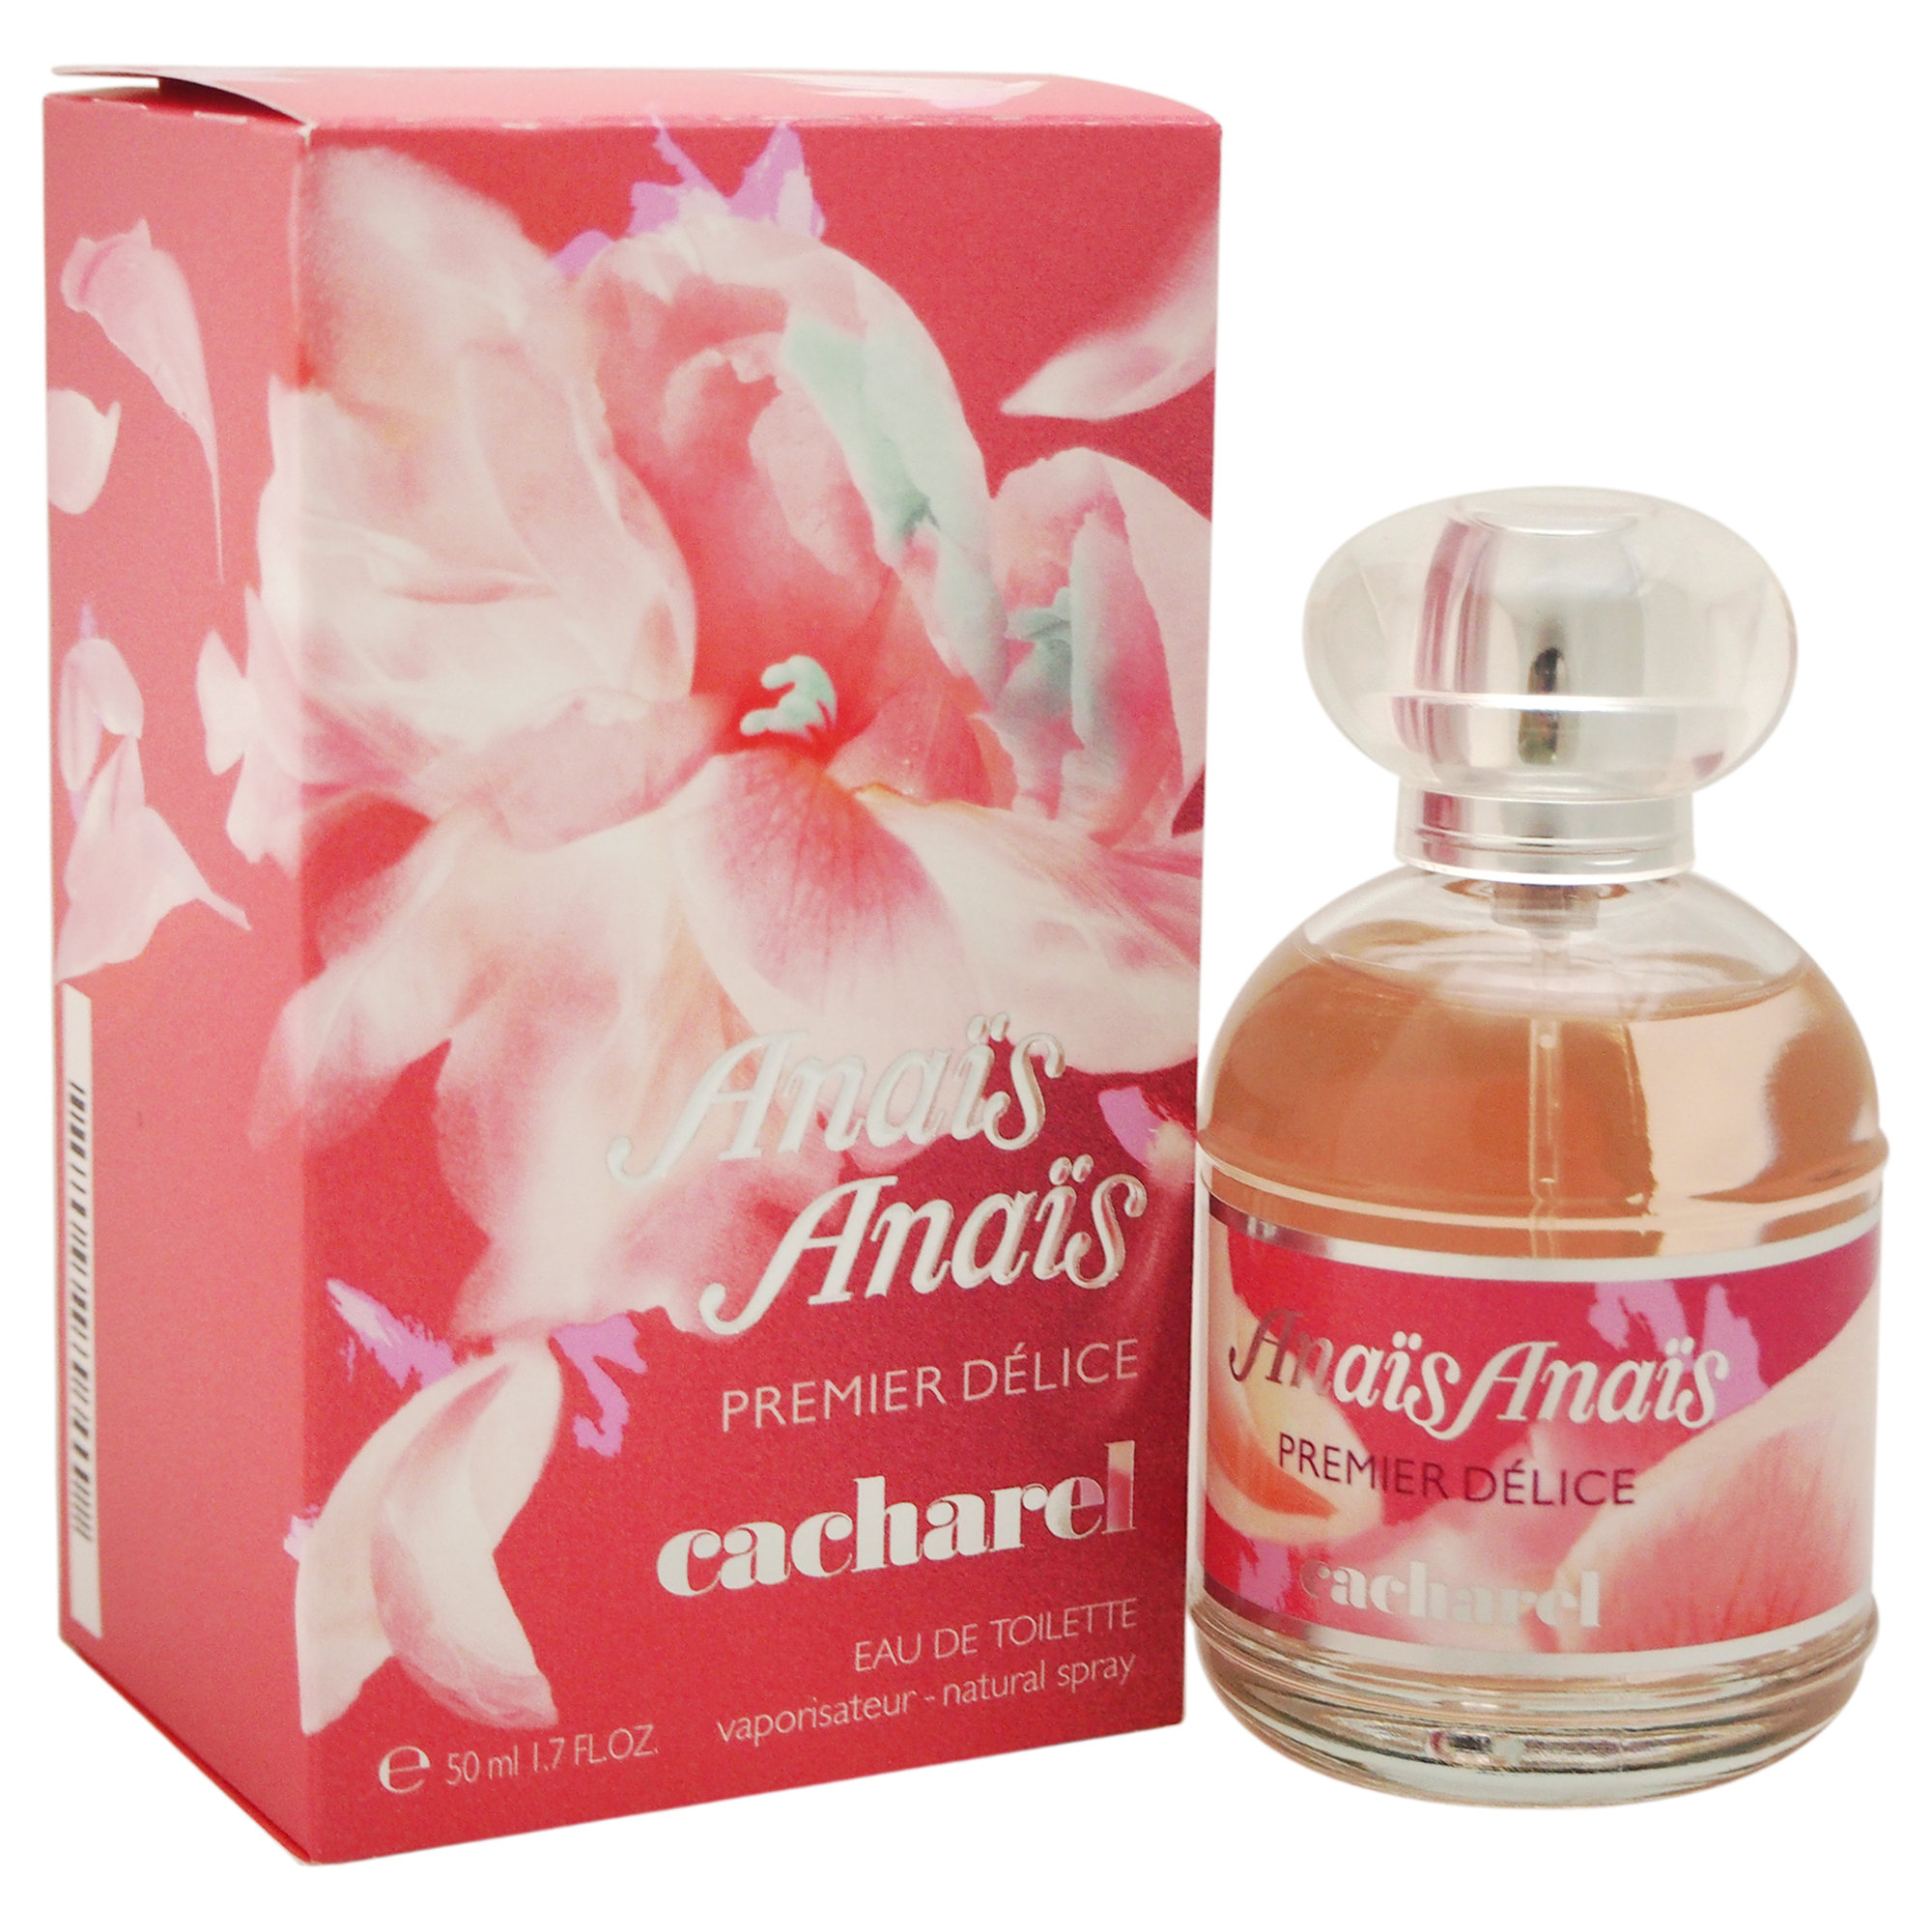 Anais Anais Premier Delice by Cacharel for Women - 1.7 oz EDT Spray